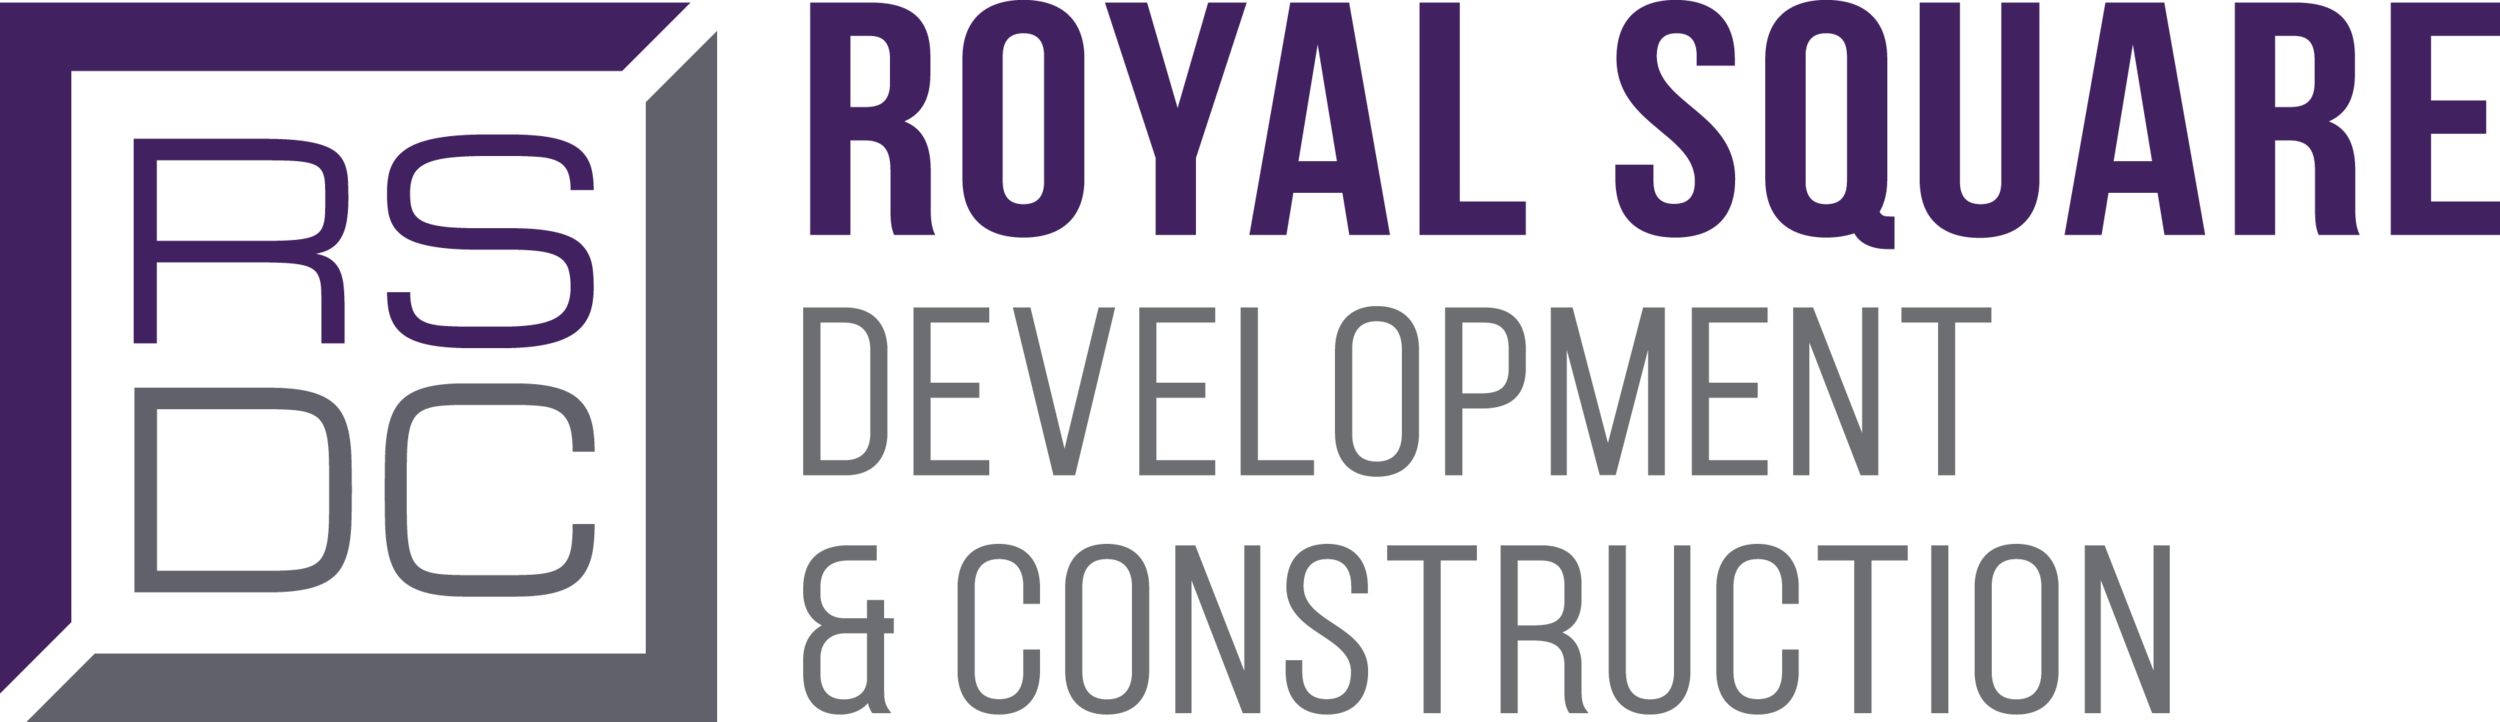 Royal Square Development &amp; Construction